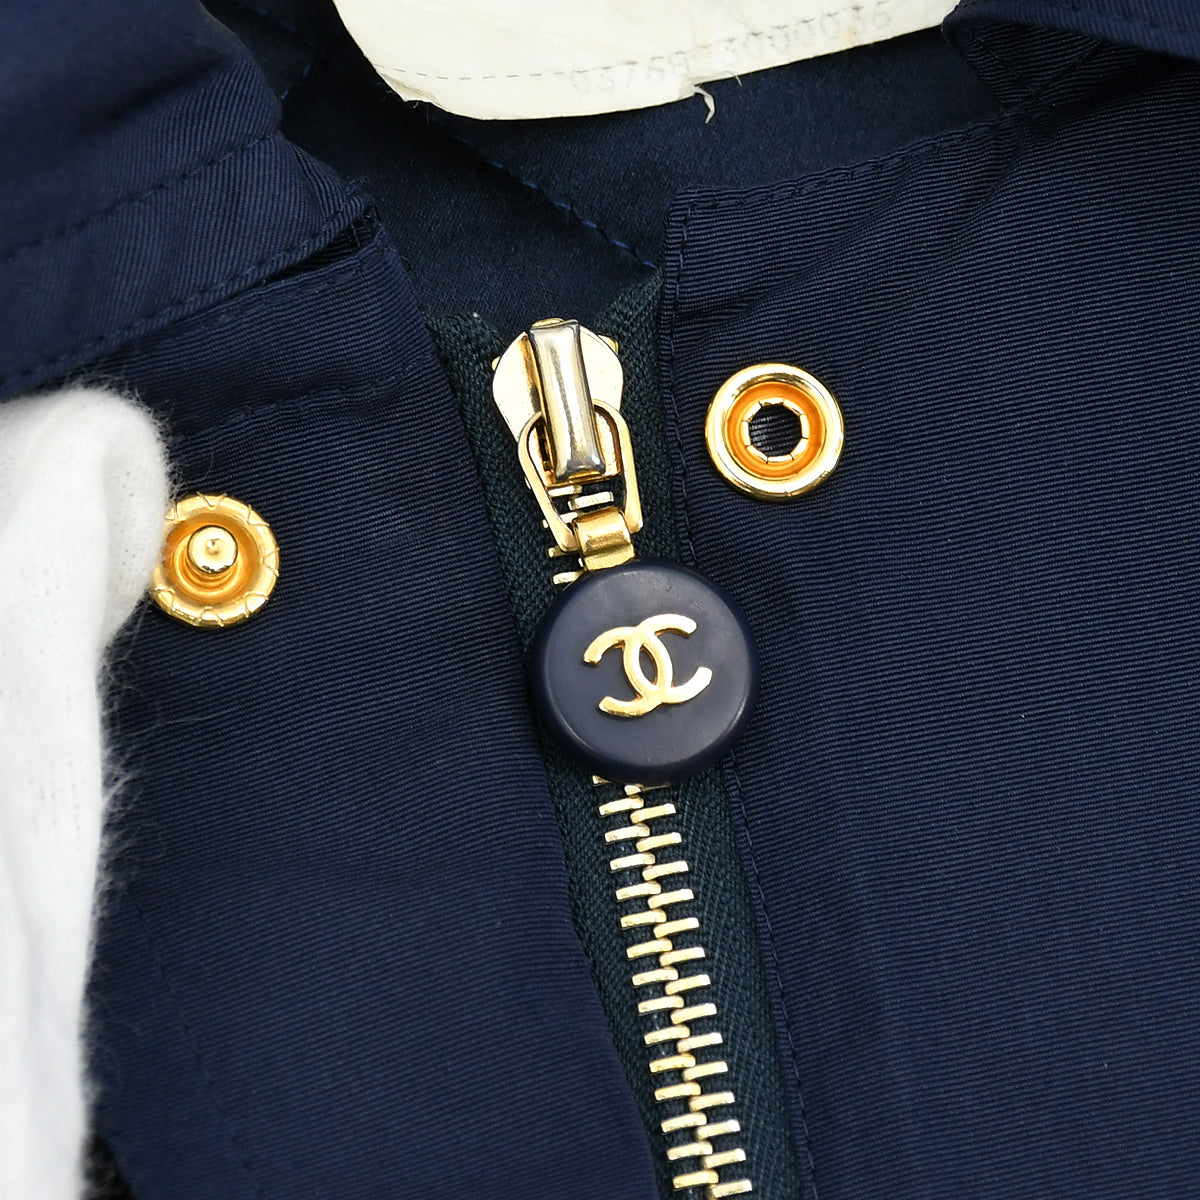 Chanel Hooded Coat Navy 